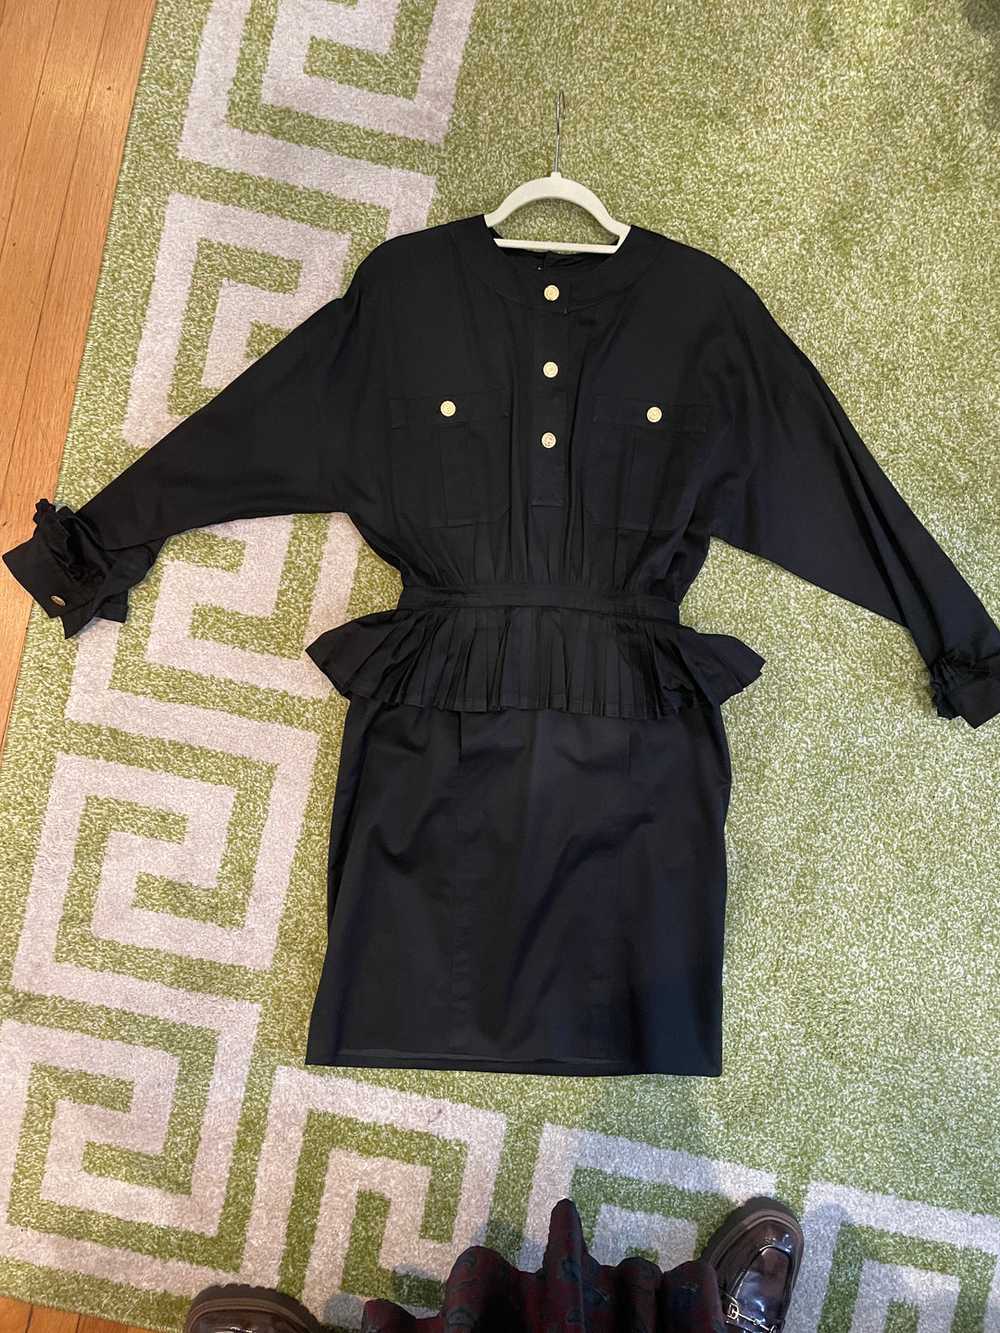 Chanel Black Cotton Dress (Size 4) - image 2